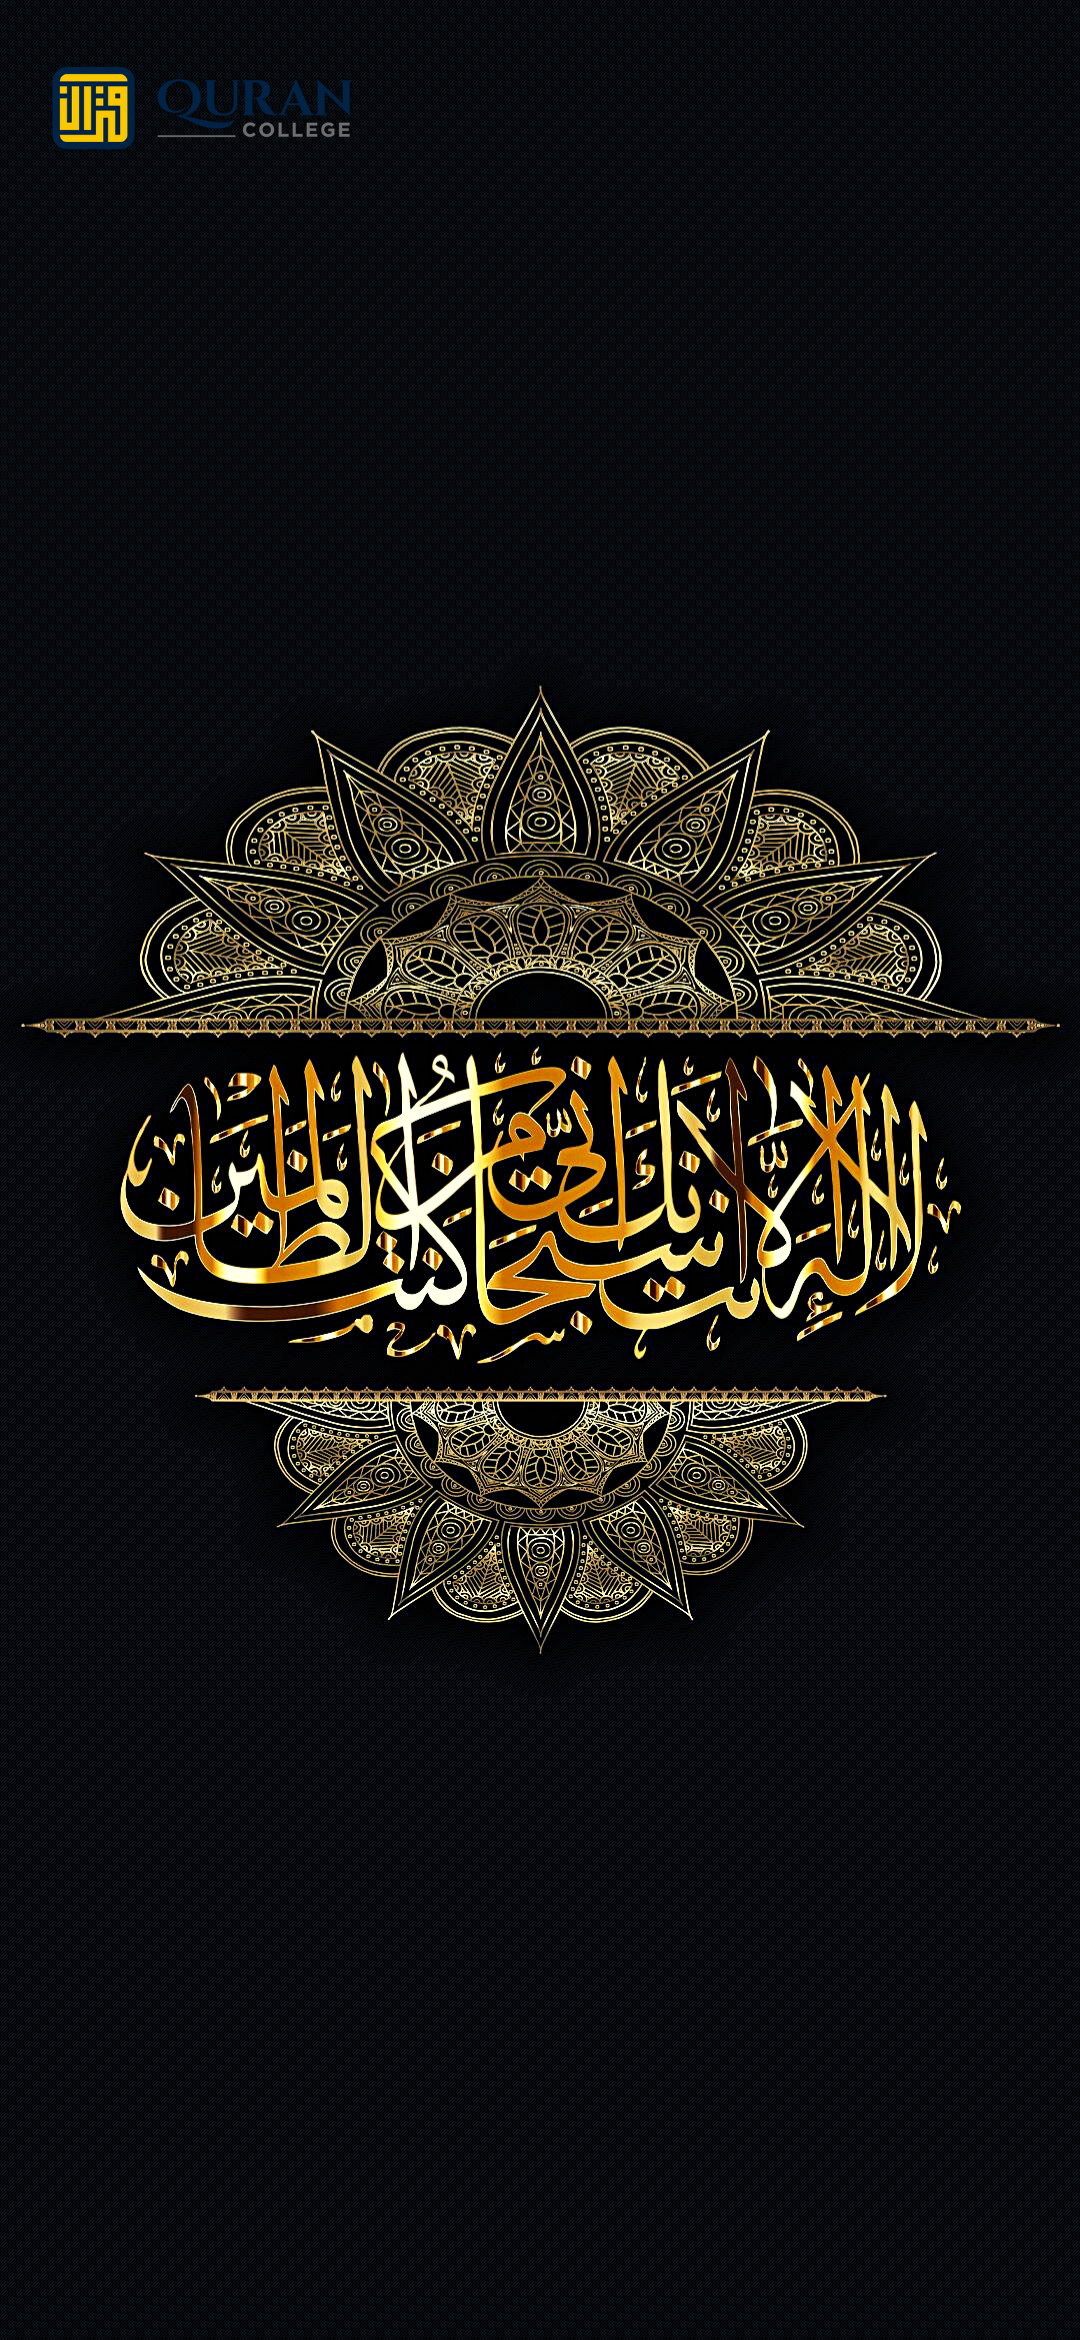 Learn Quran with Translation. Quran College. Islamic wallpaper hd, Islamic wallpaper, Smartphone wallpaper